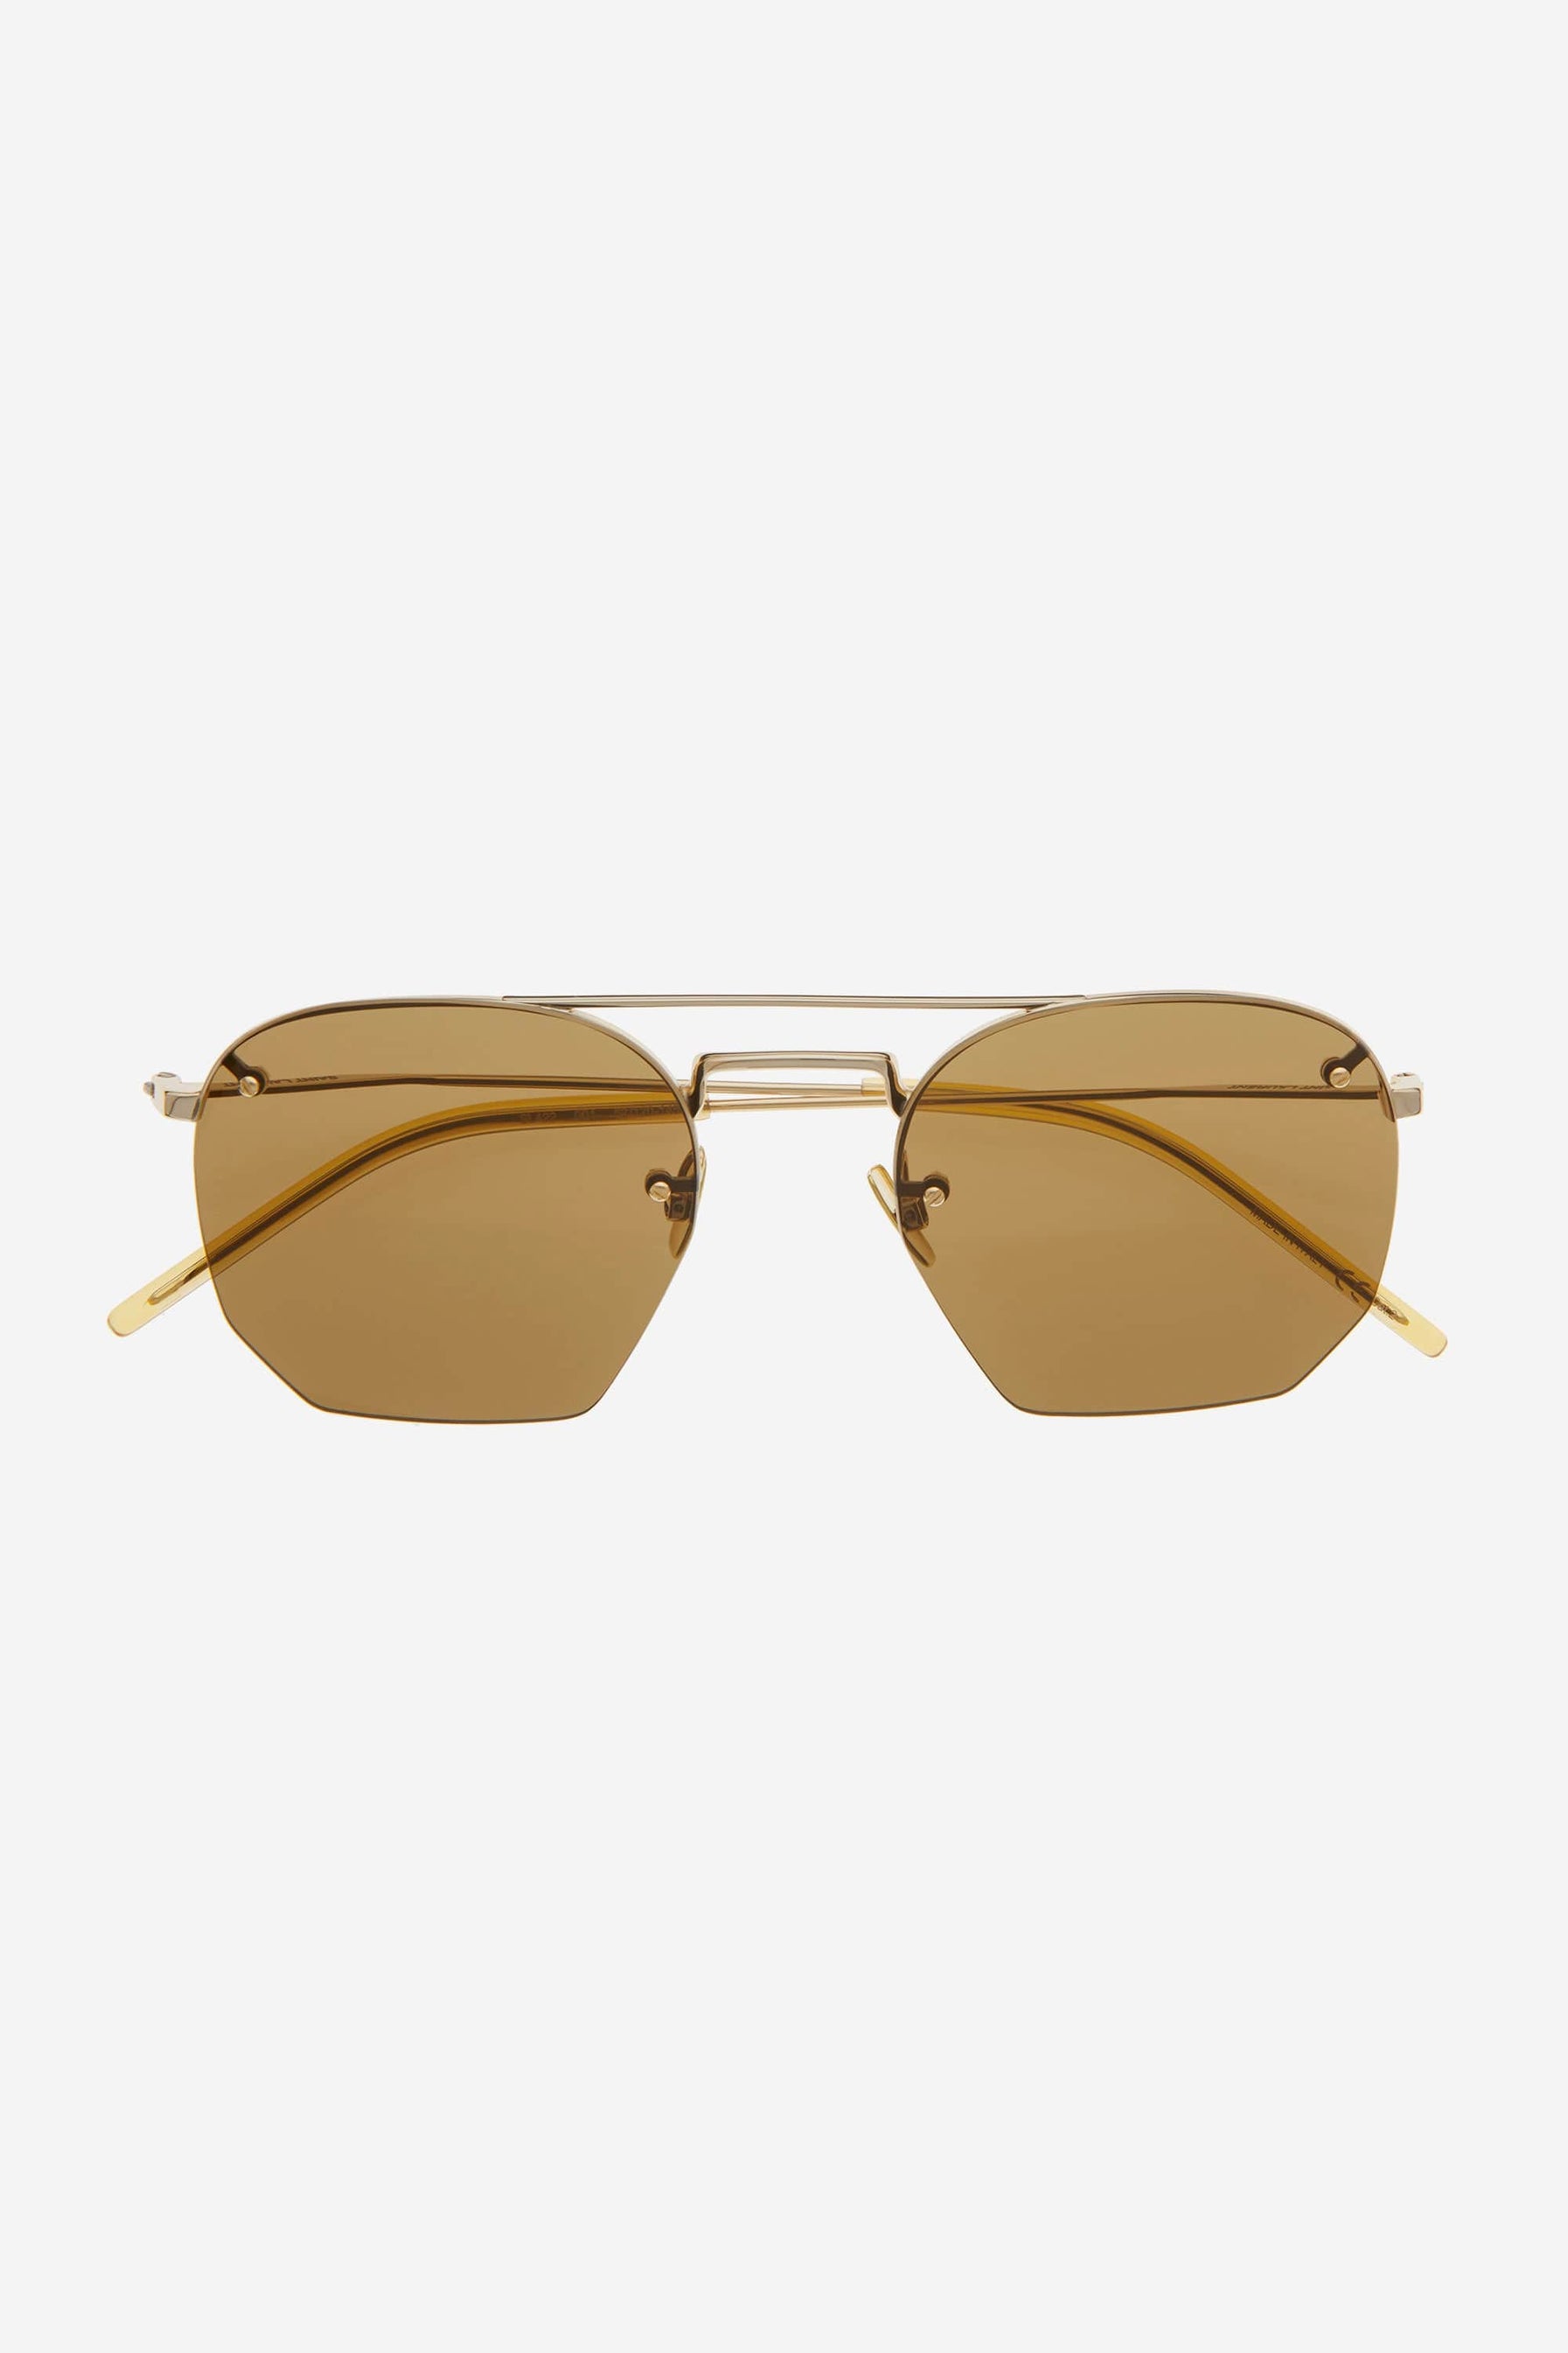 Saint Laurent rimless metal sytle gold brown sunglasses - Eyewear Club